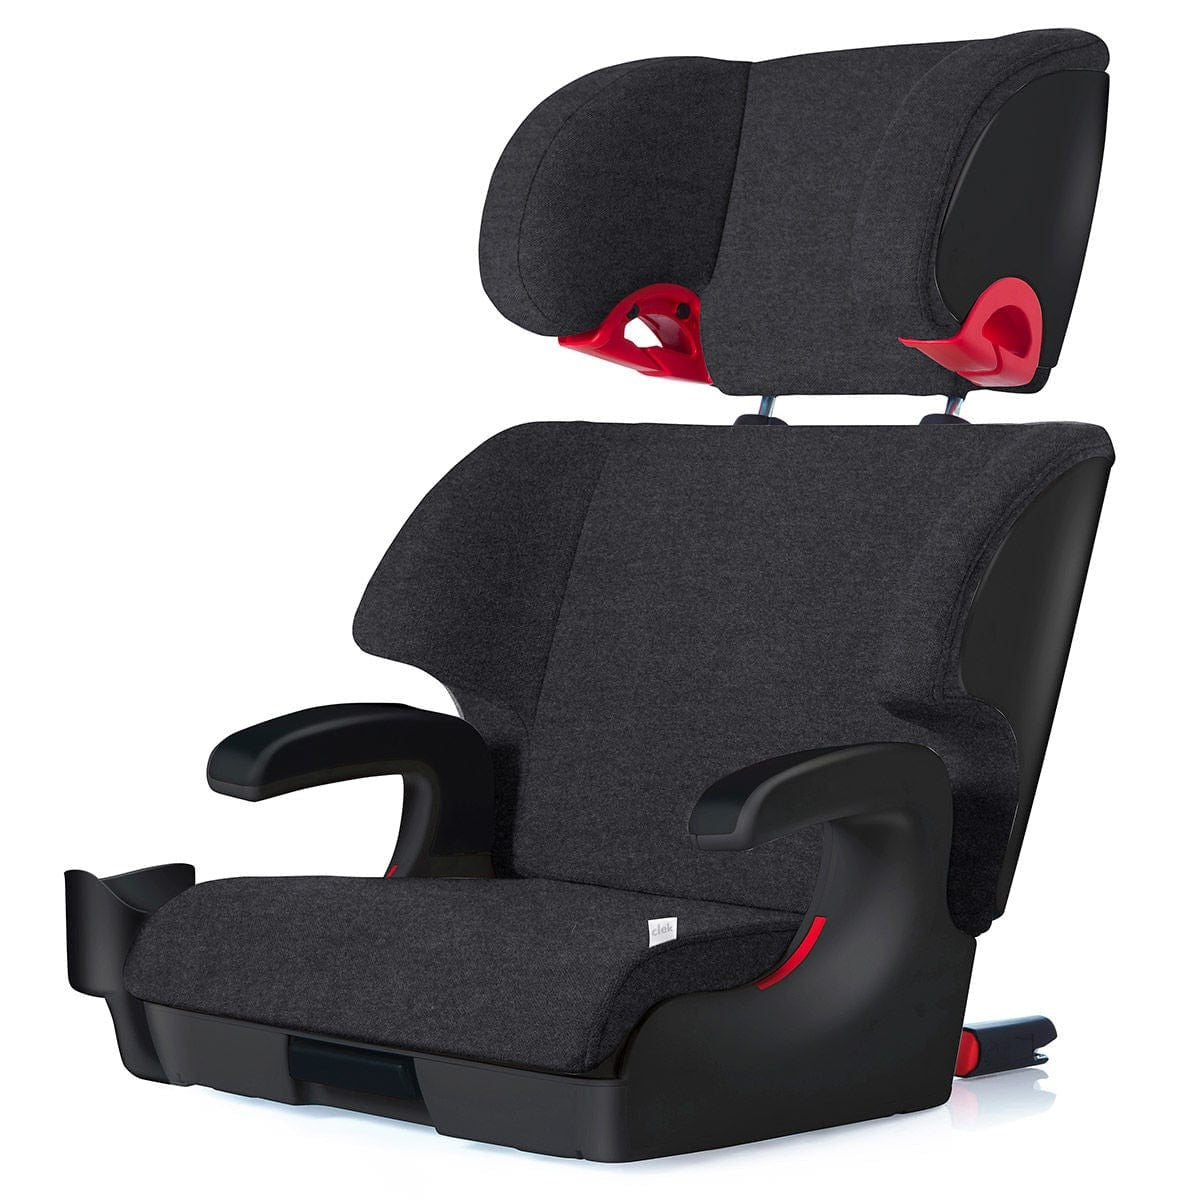 Clek booster seat Mammoth (Merino Wool) Clek Oobr Fullback Booster Seat